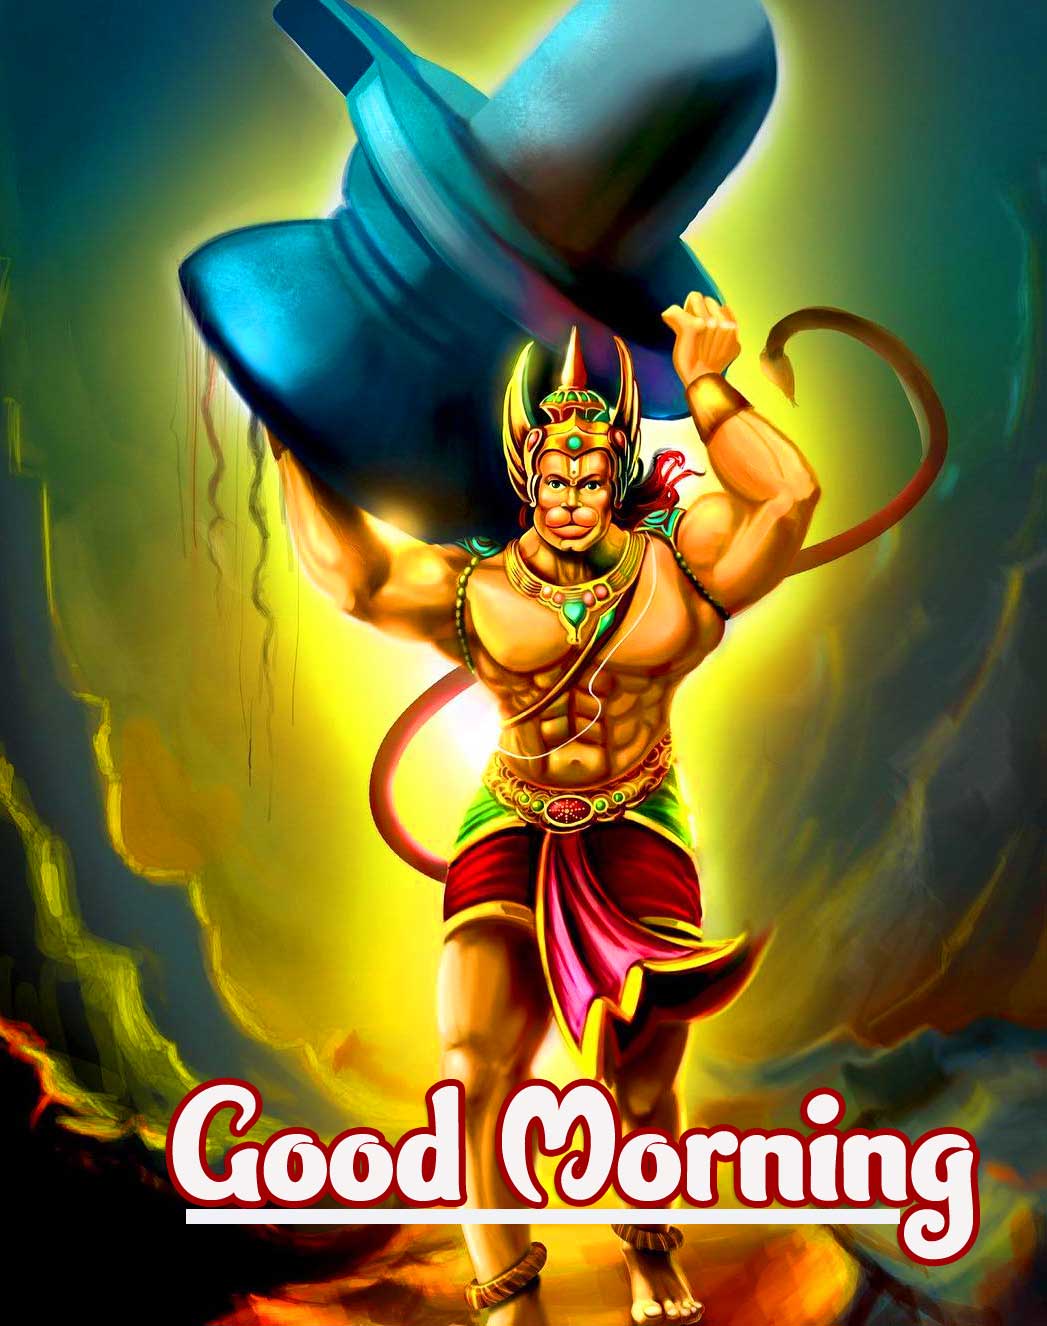 Good Morning Shubh Shanivar Hanuman Ji Images Pics Download 